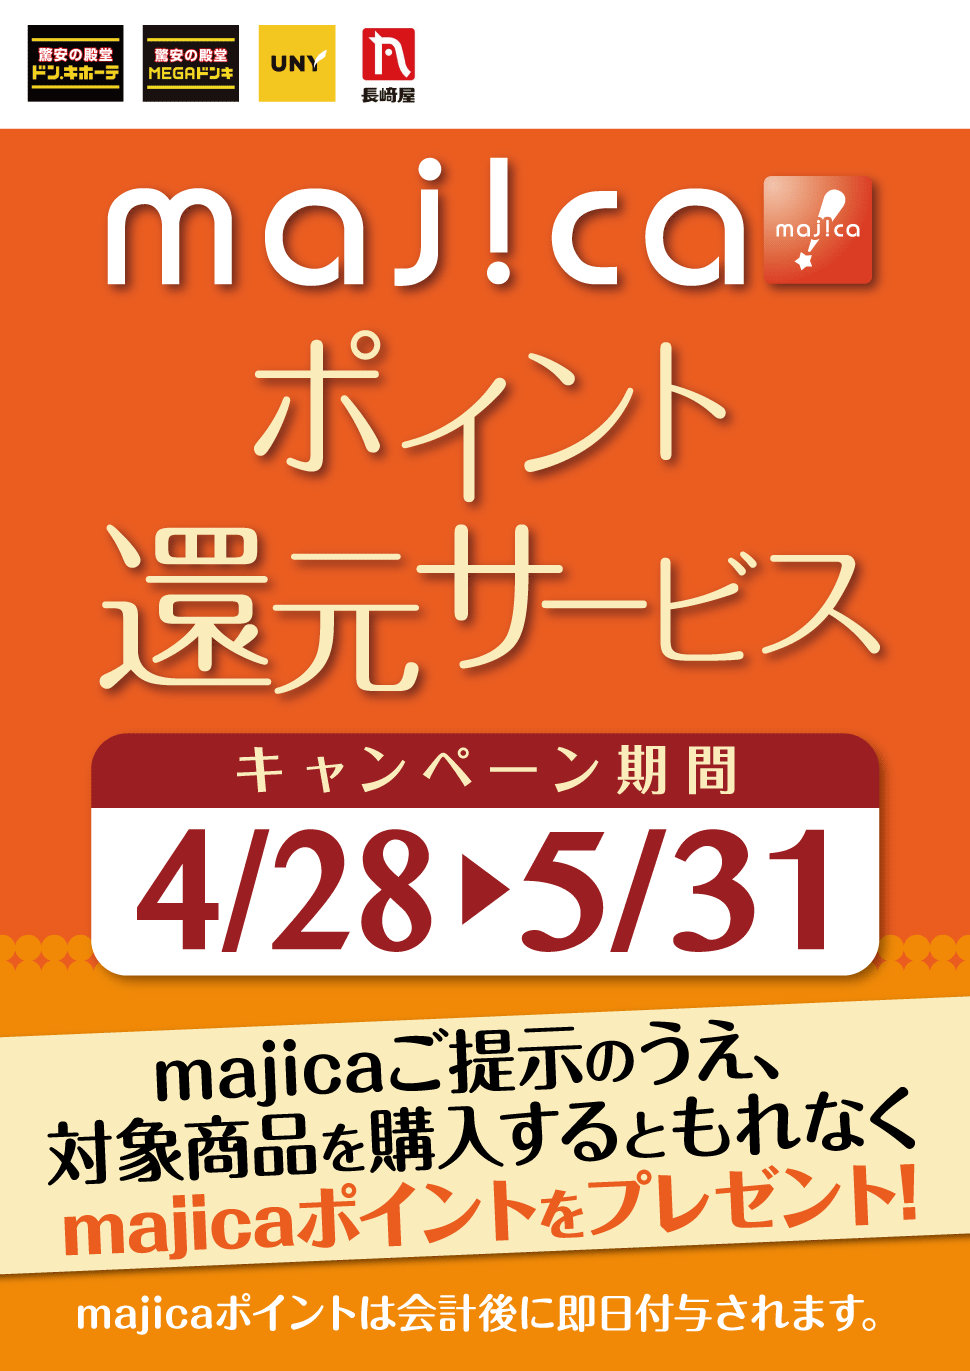 majicaポイント還元サービス「ブランド品キャンぺーン」